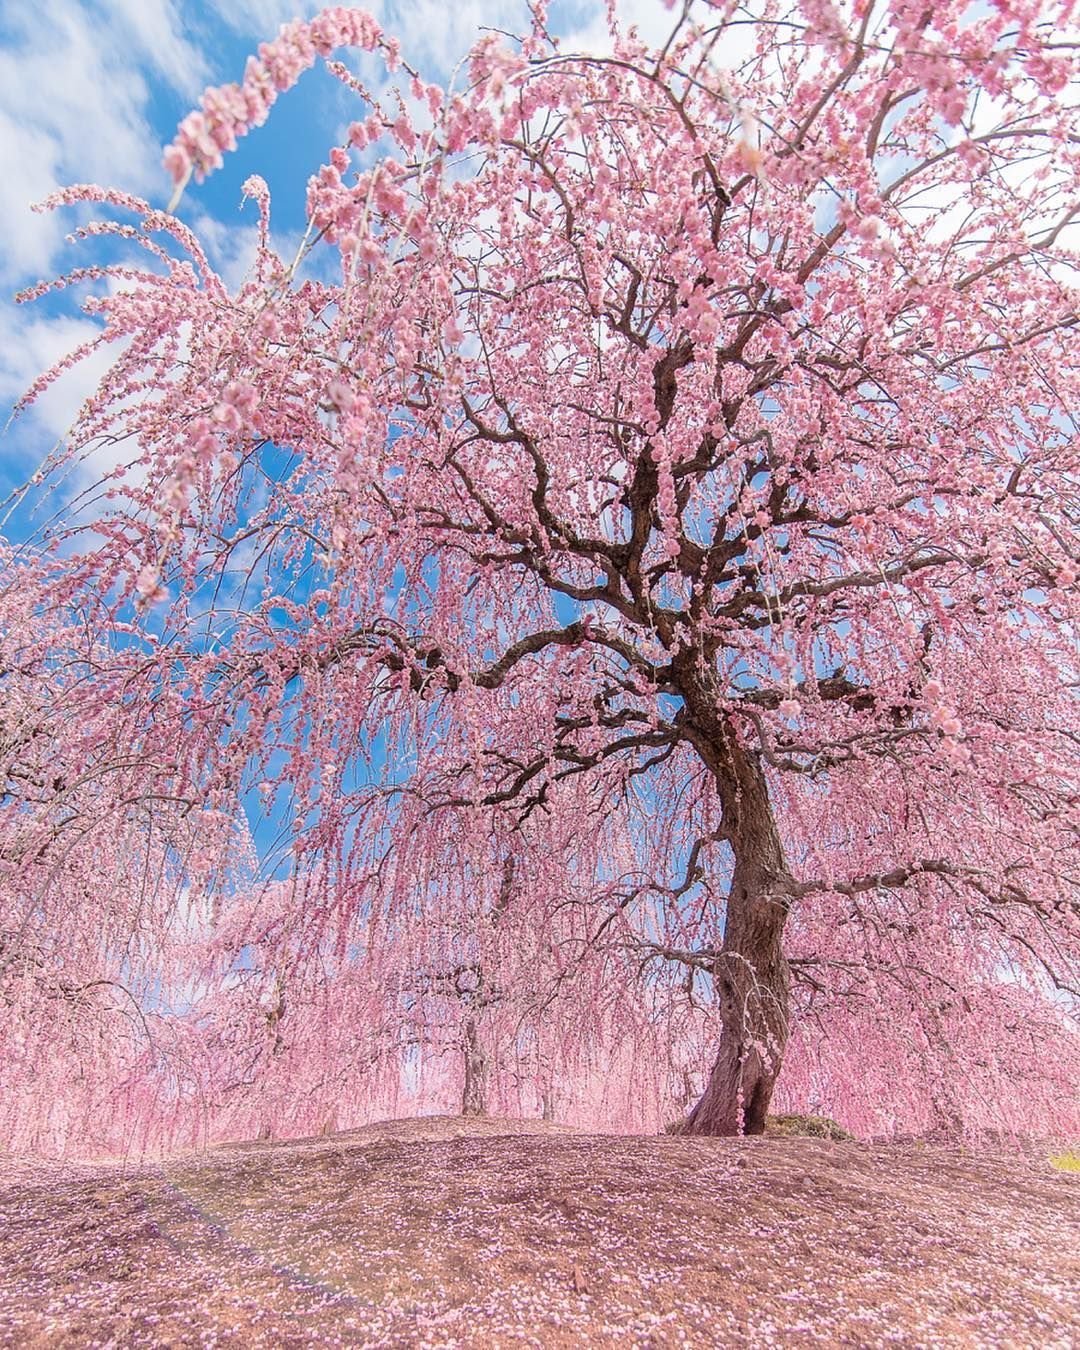 Цветущее дерево без листьев. Сакура дерево. Розовое дерево. Красивое цветущее дерево. Дерево срощовыми листьями.